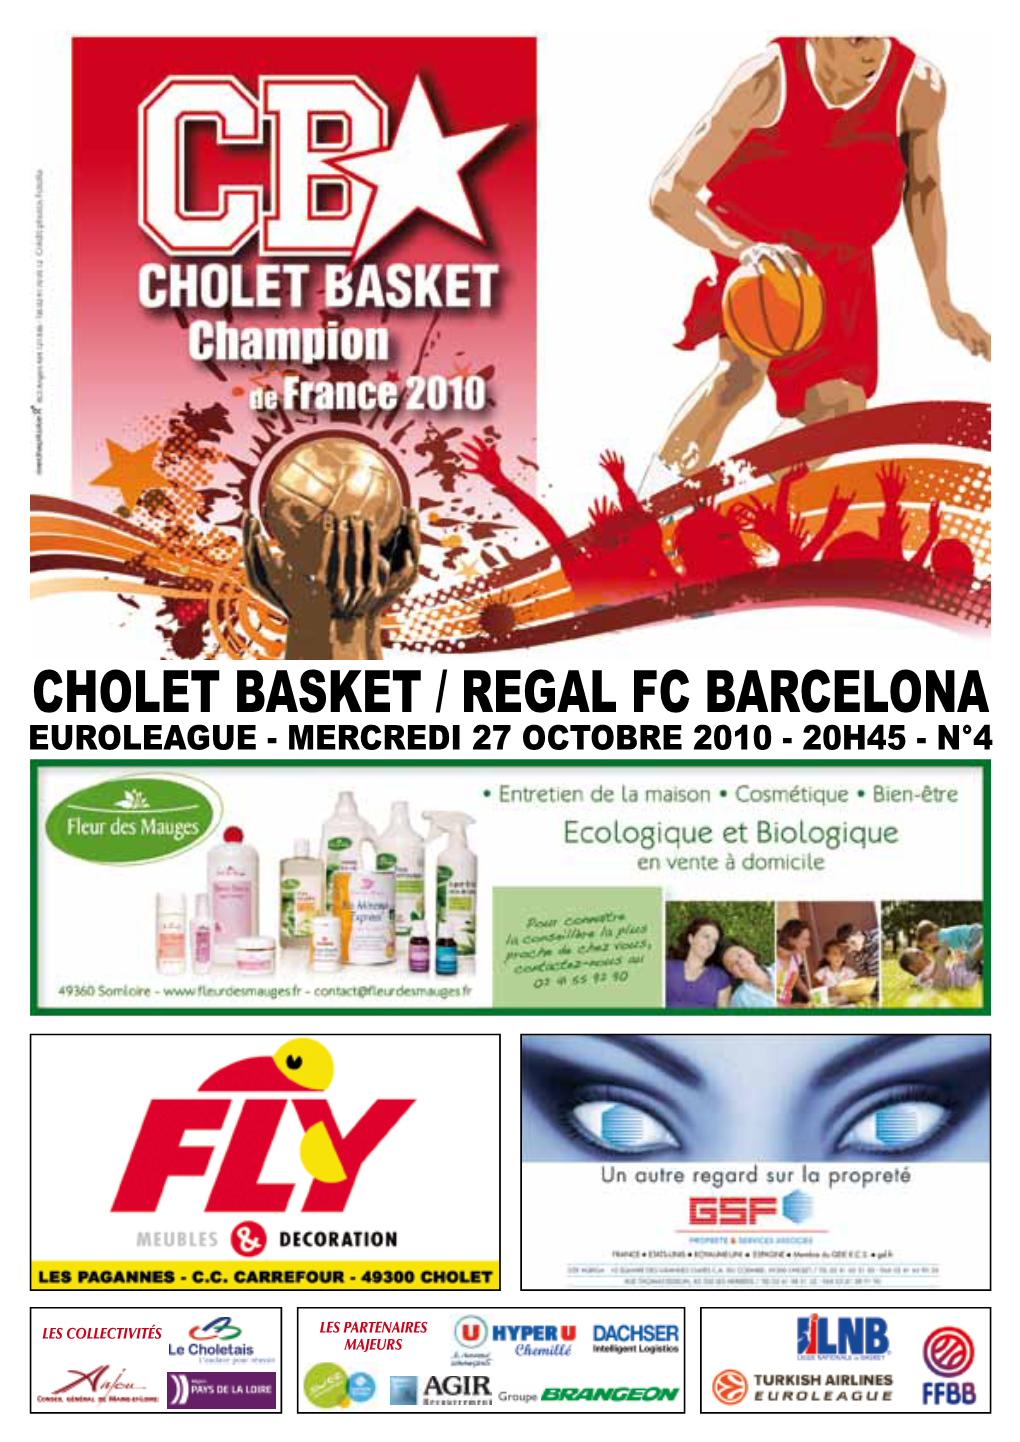 Cholet Basket / Regal Fc Barcelona Euroleague - Mercredi 27 Octobre 2010 - 20H45 - N°4